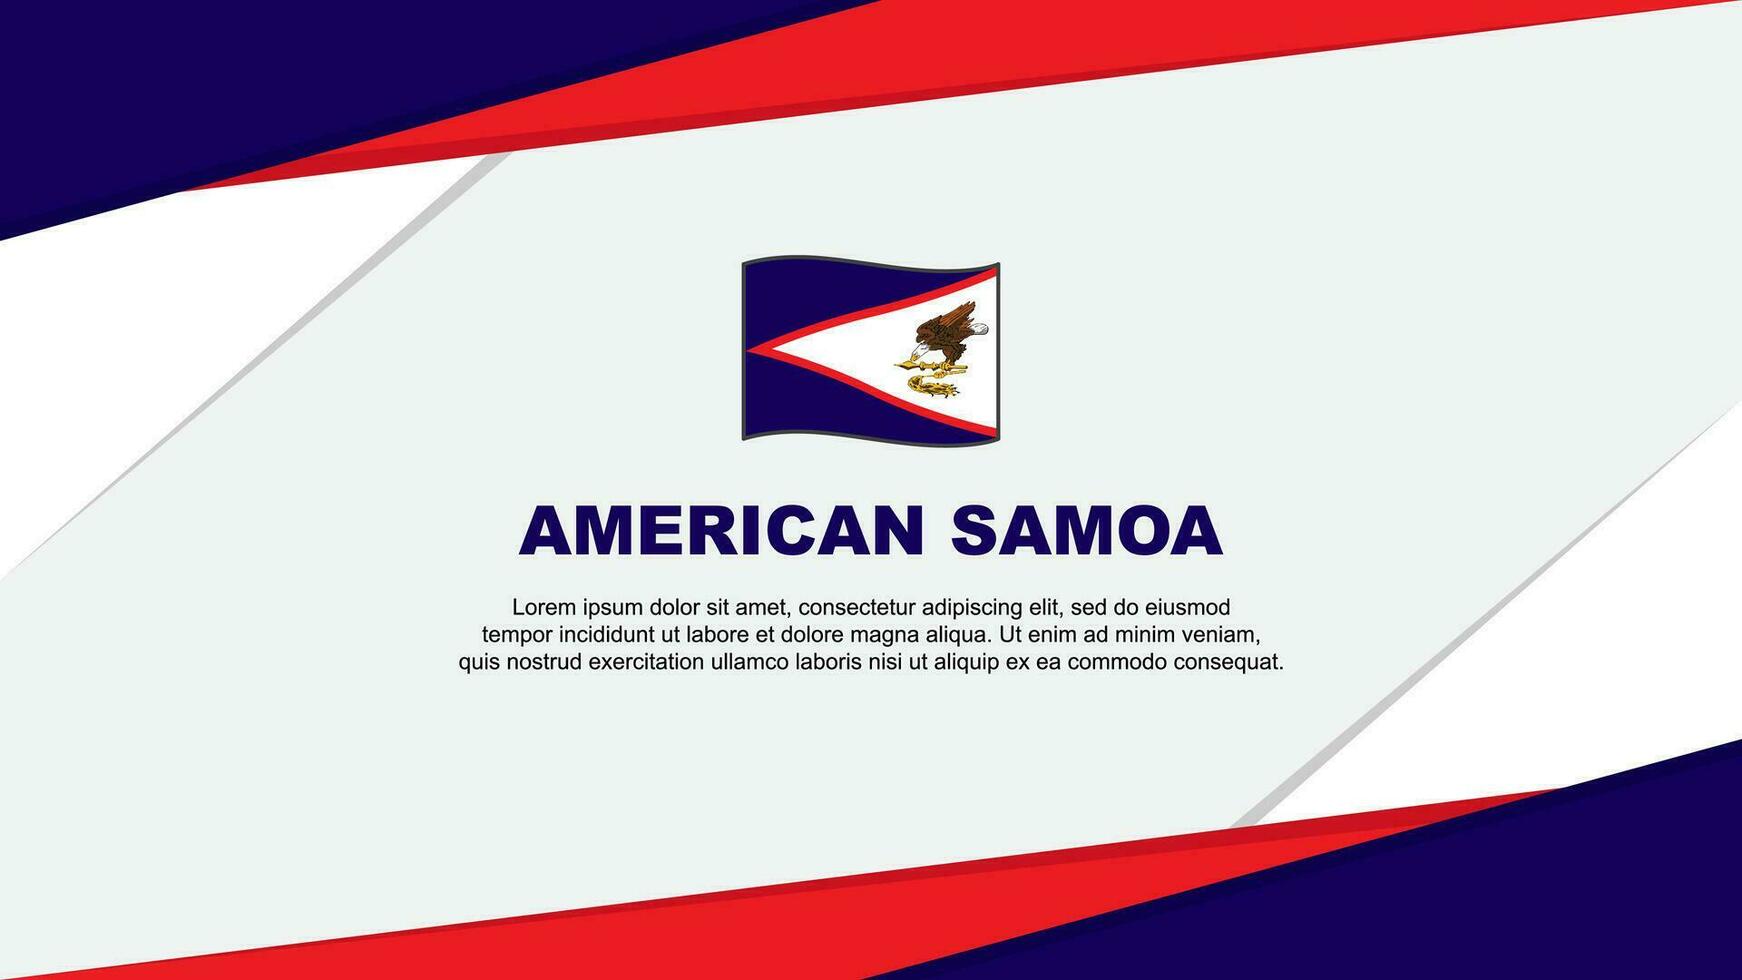 American Samoa Flag Abstract Background Design Template. American Samoa Independence Day Banner Cartoon Vector Illustration. American Samoa